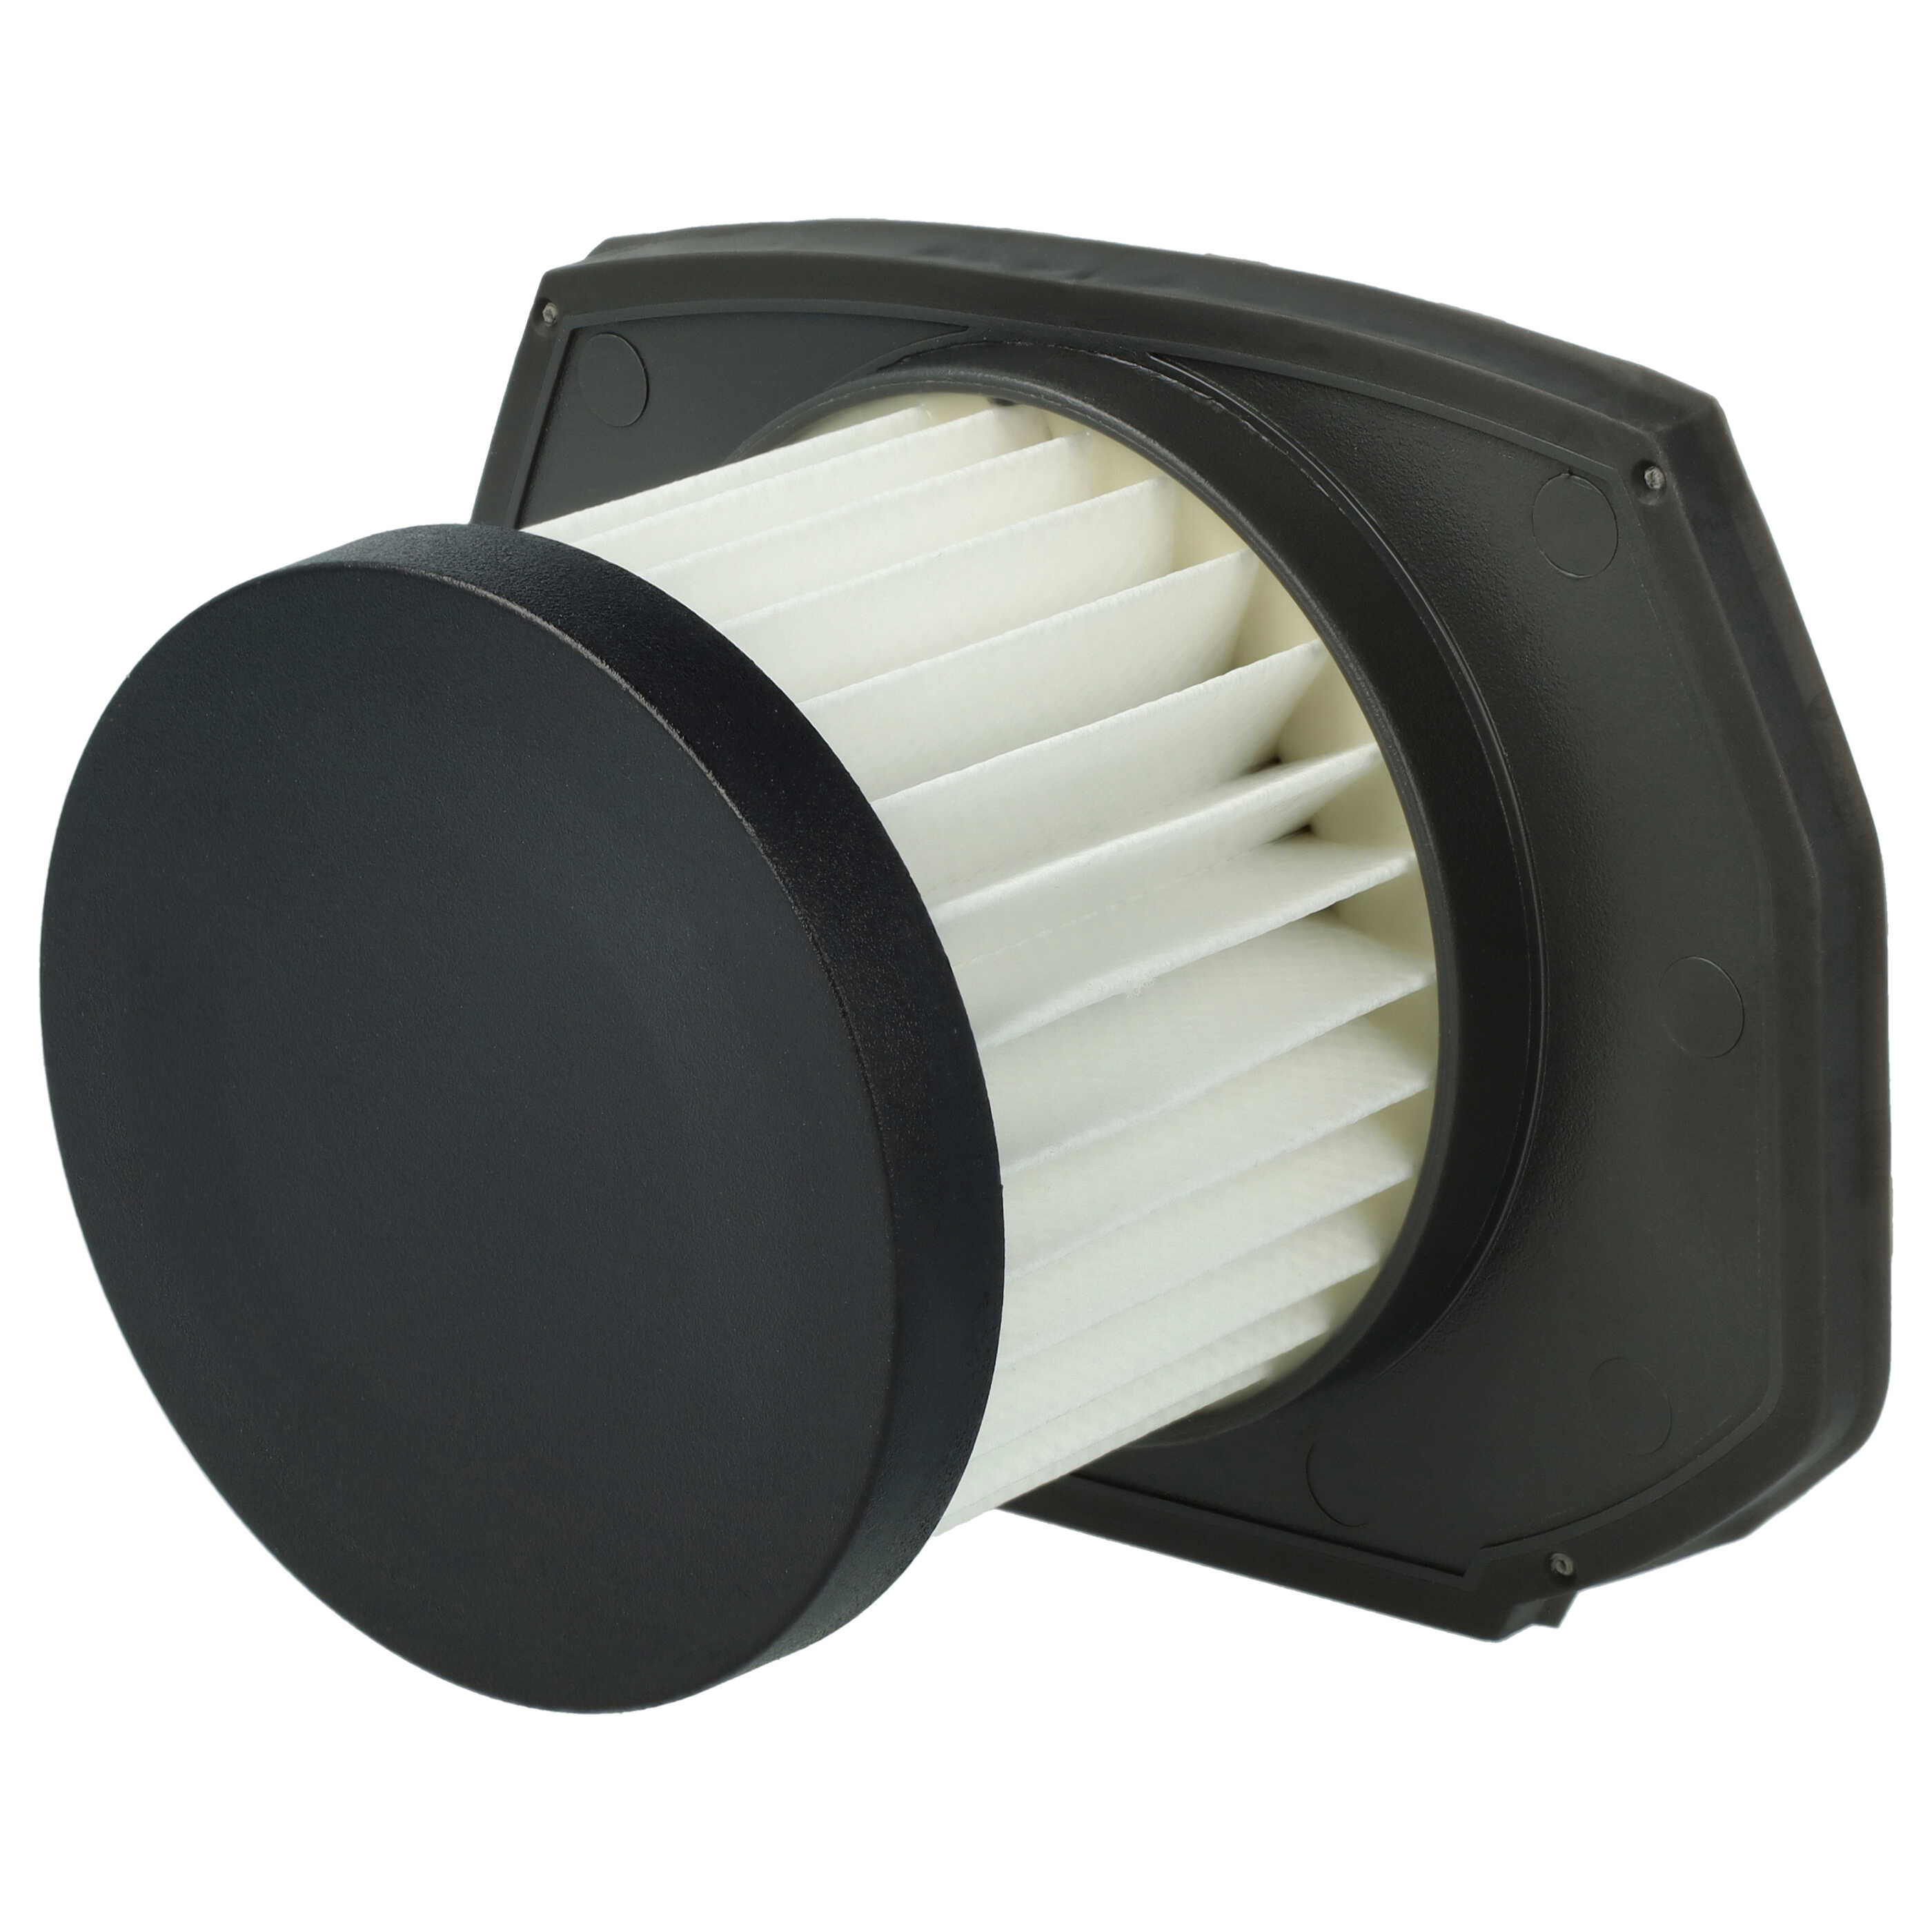 Filtre remplace Ryobi 313282001 pour aspirateur - filtre HEPA